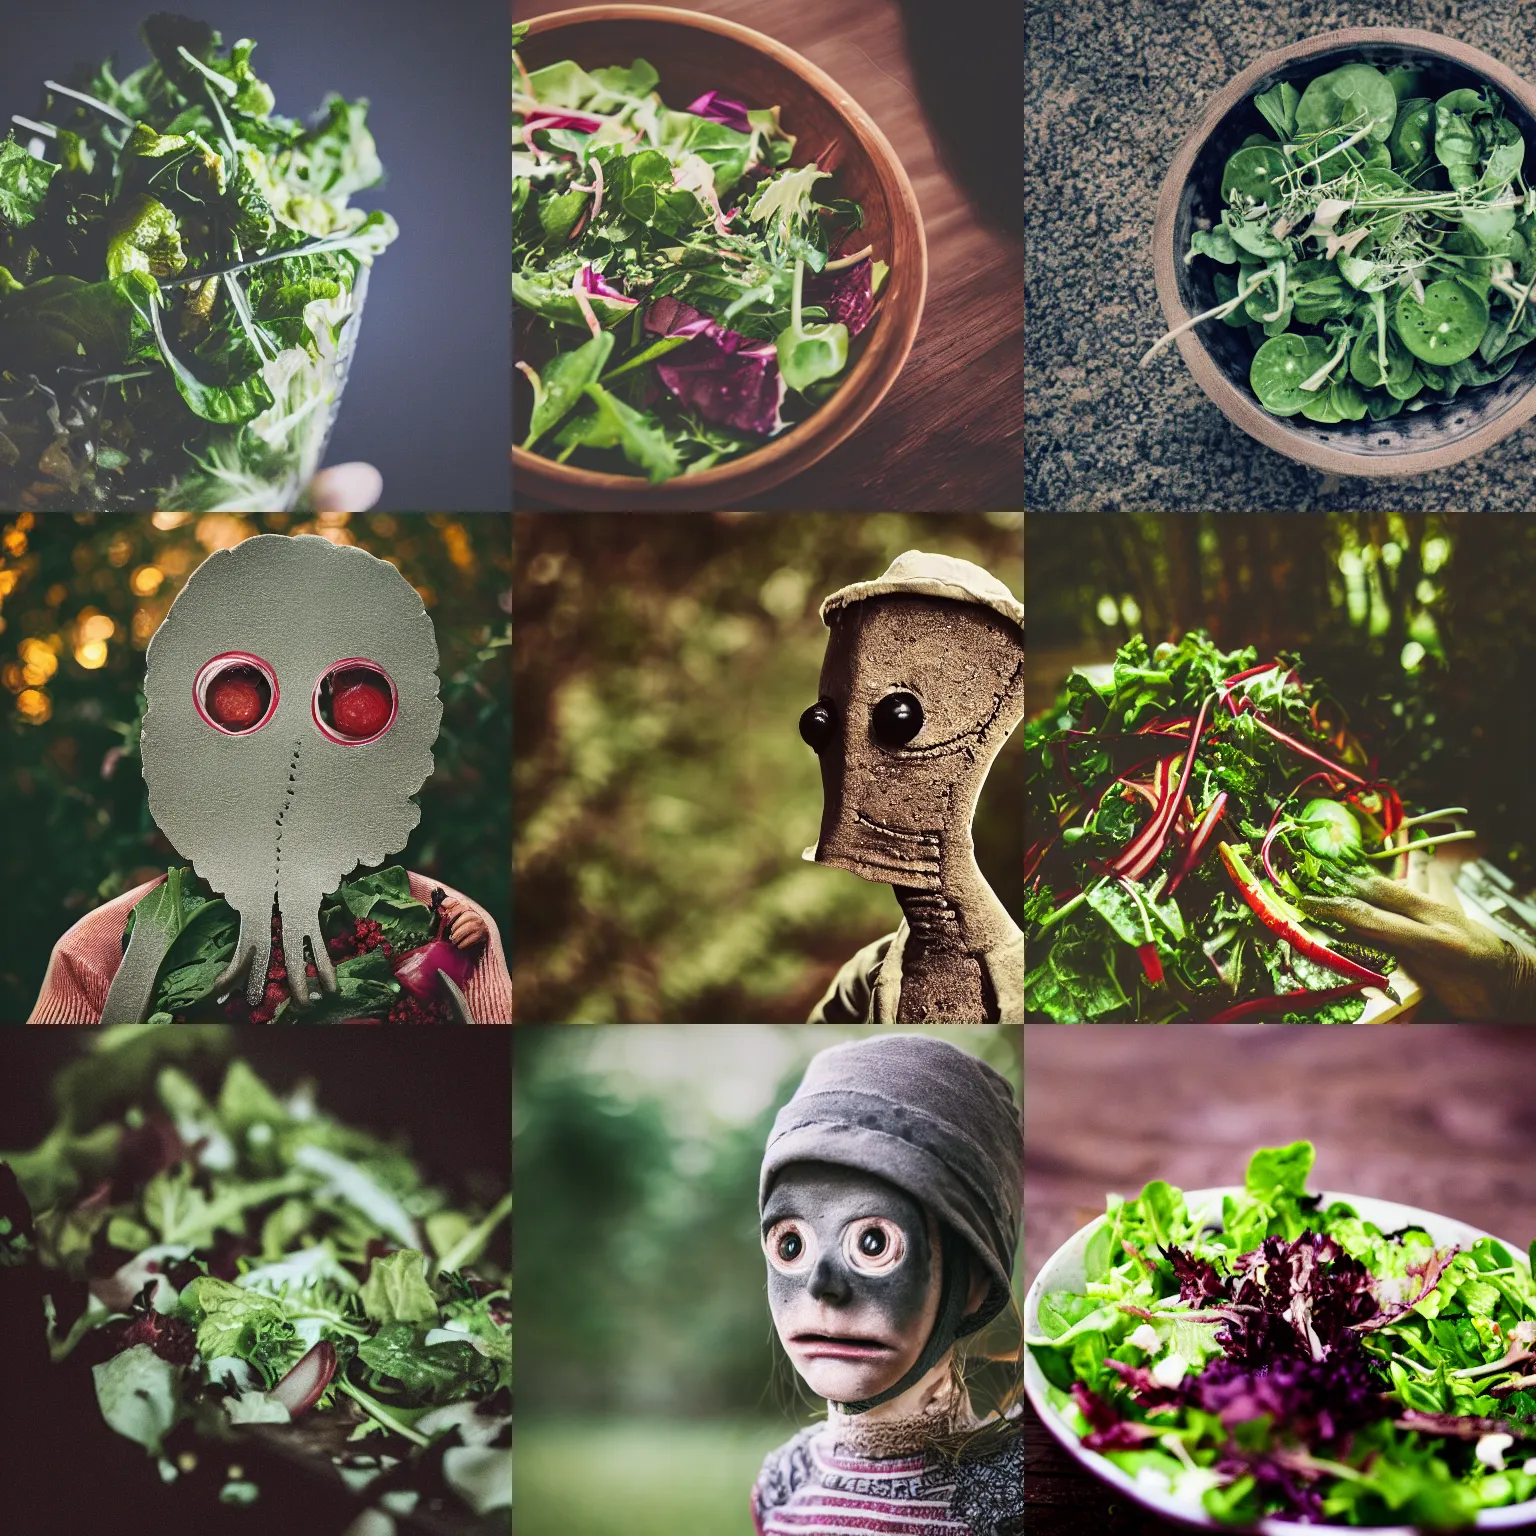 Prompt: Salad Fingers, portrait photography, depth of field, bokeh